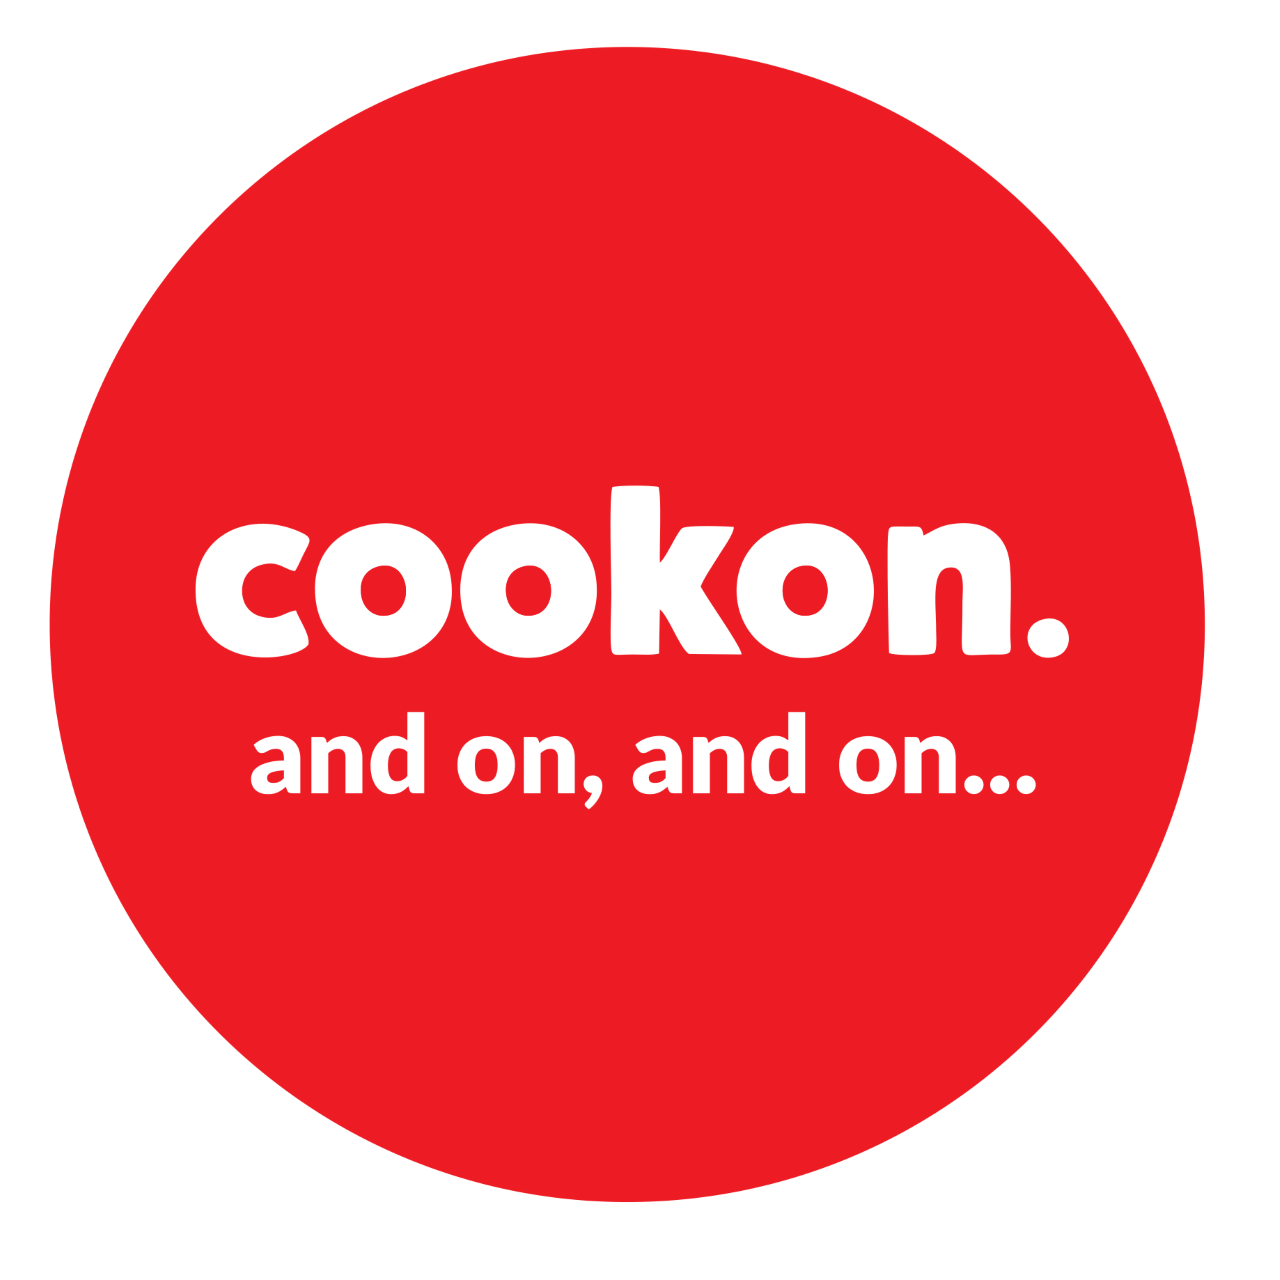 Case study of Cookon